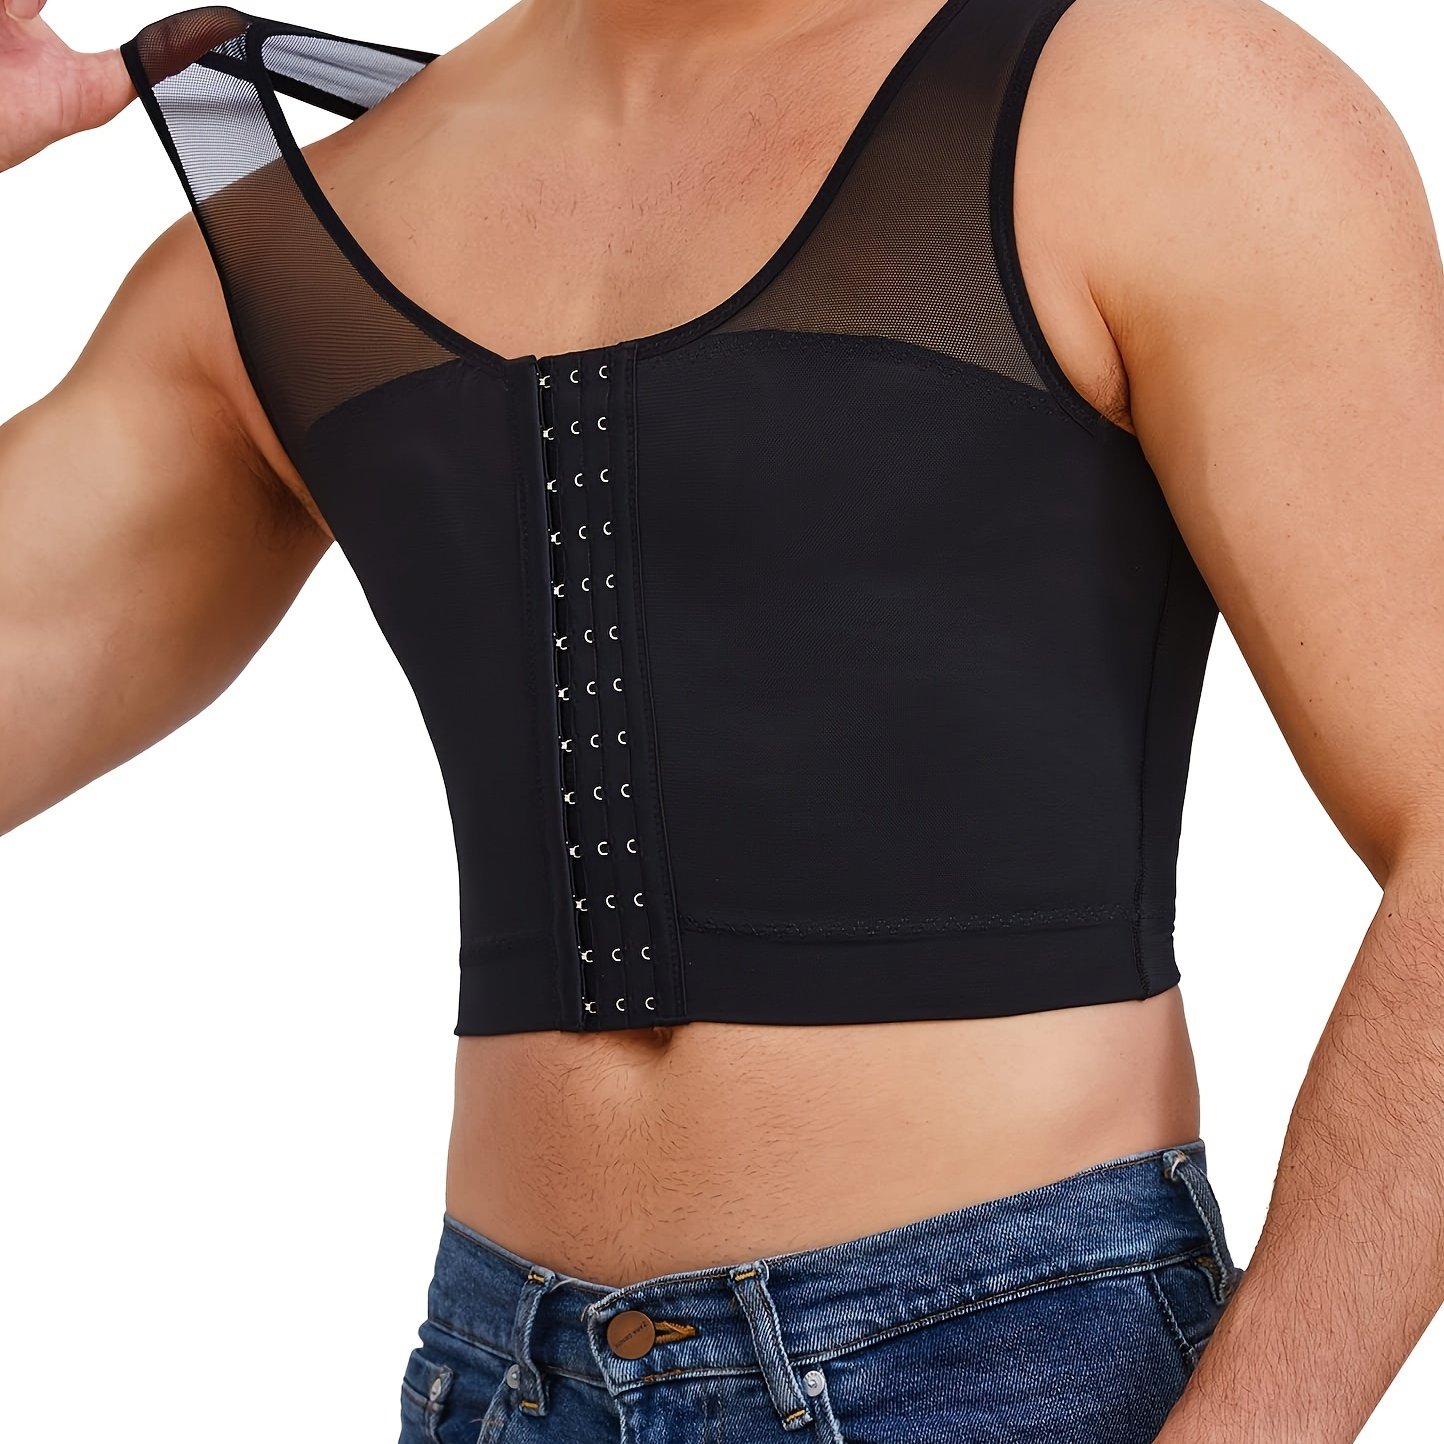 mens gynecomastia chest vest chest binder compression slimming undershirt male corset tank tops